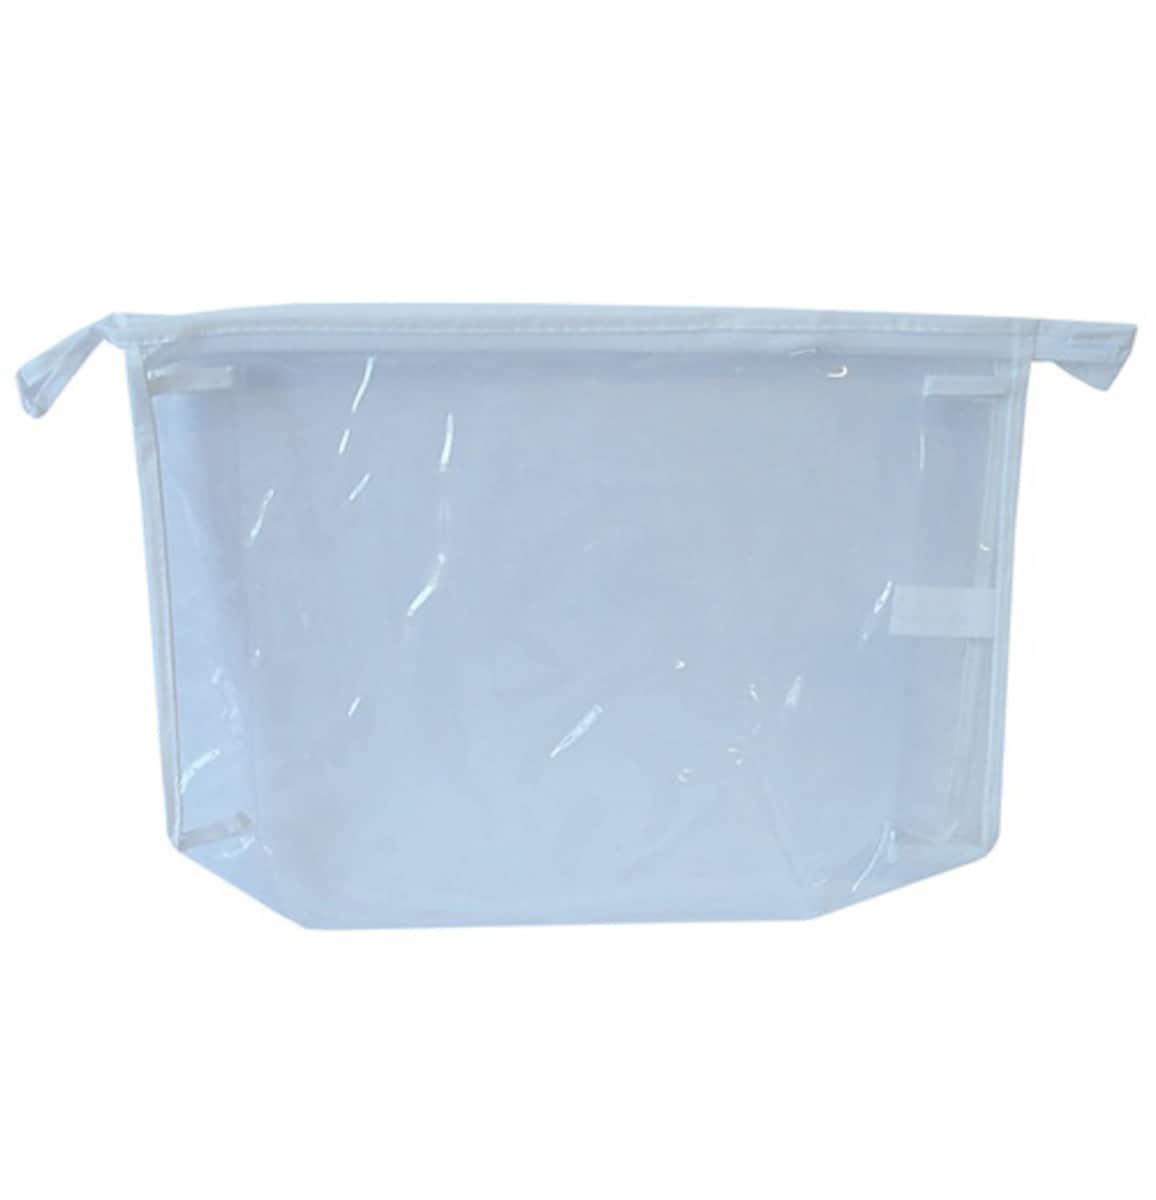 PVC Zip Bag Clear 27 x 17 x 5cm